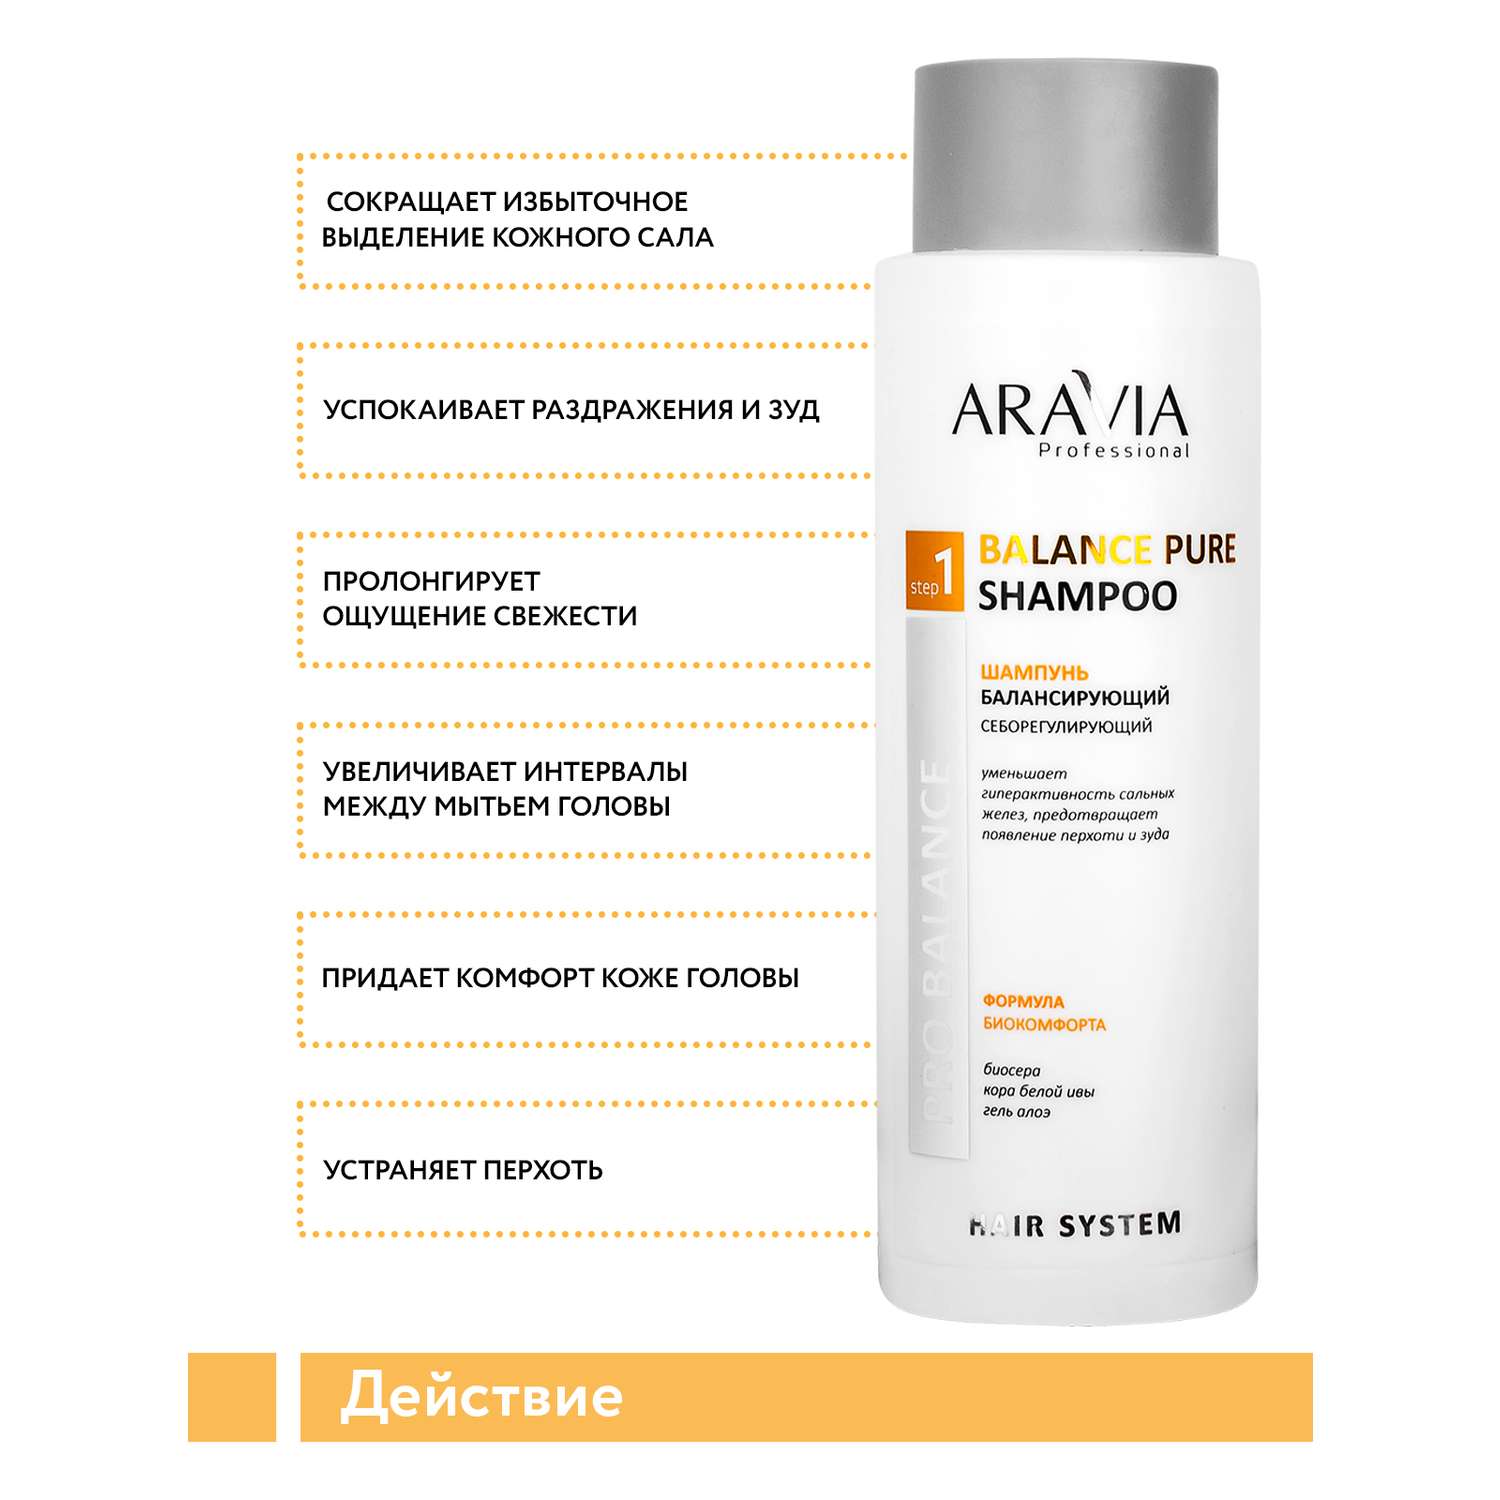 Шампунь ARAVIA Professional балансирующий себорегулирующий Balance Pure Shampoo 400 мл - фото 4